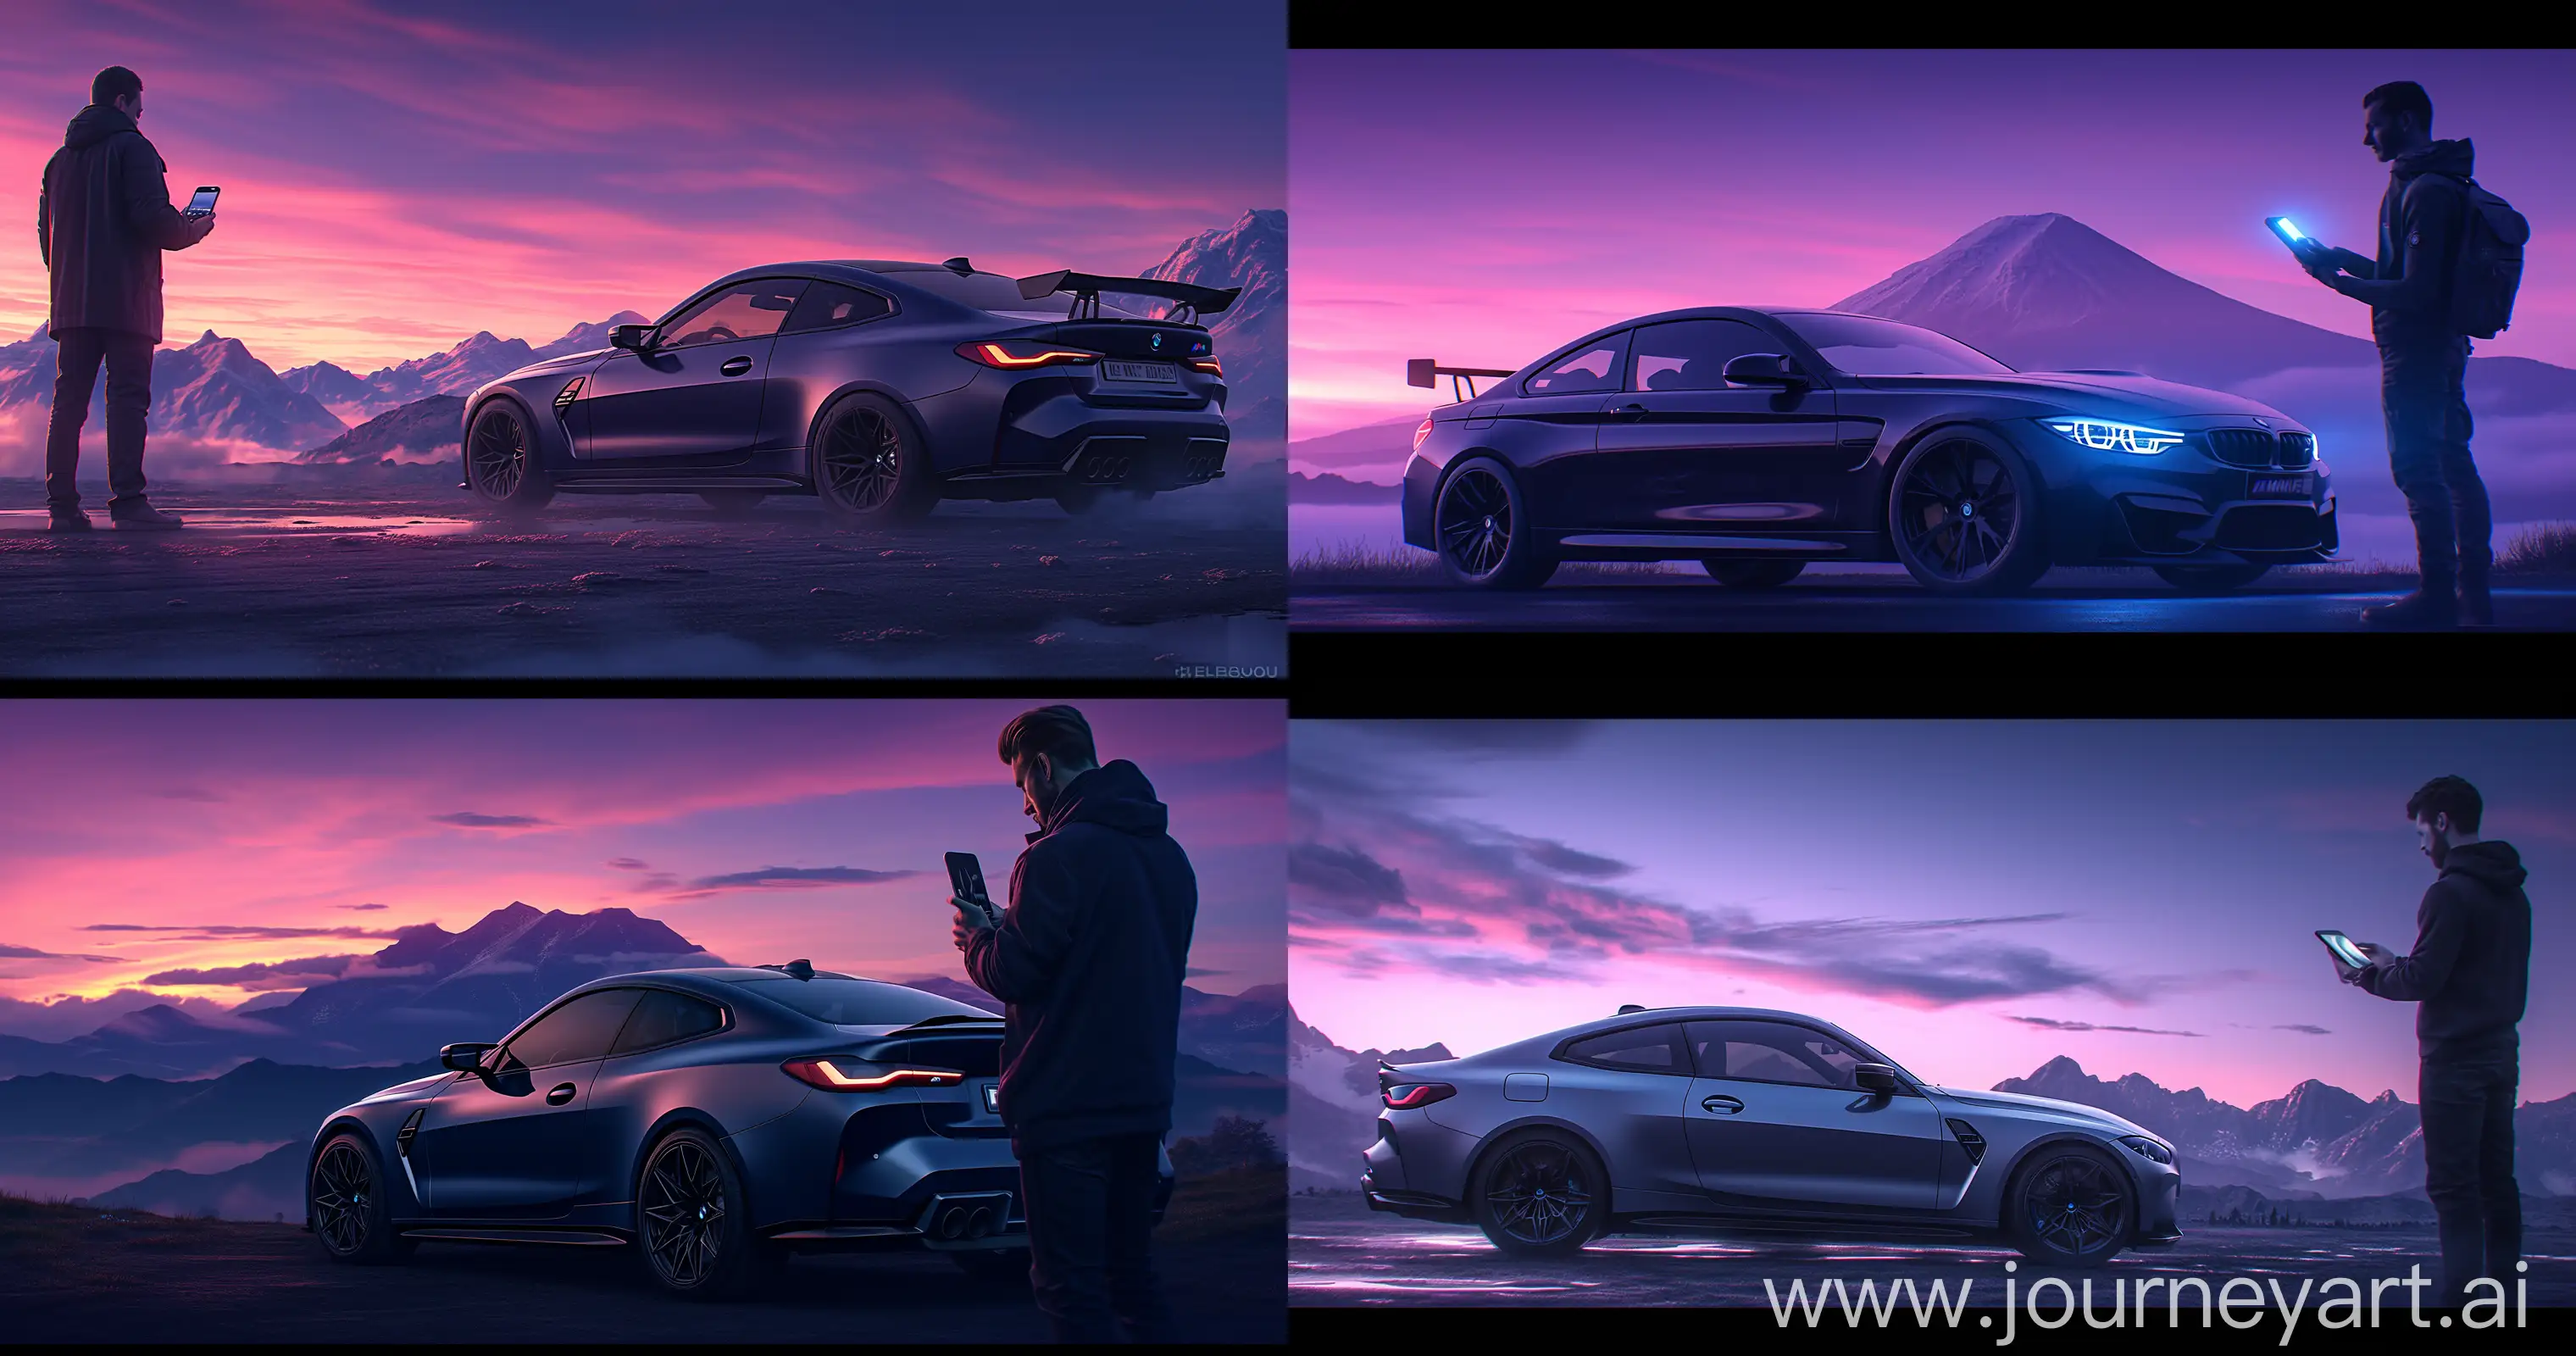 BMW-M4-Showcased-in-Scenic-Twilight-Landscape